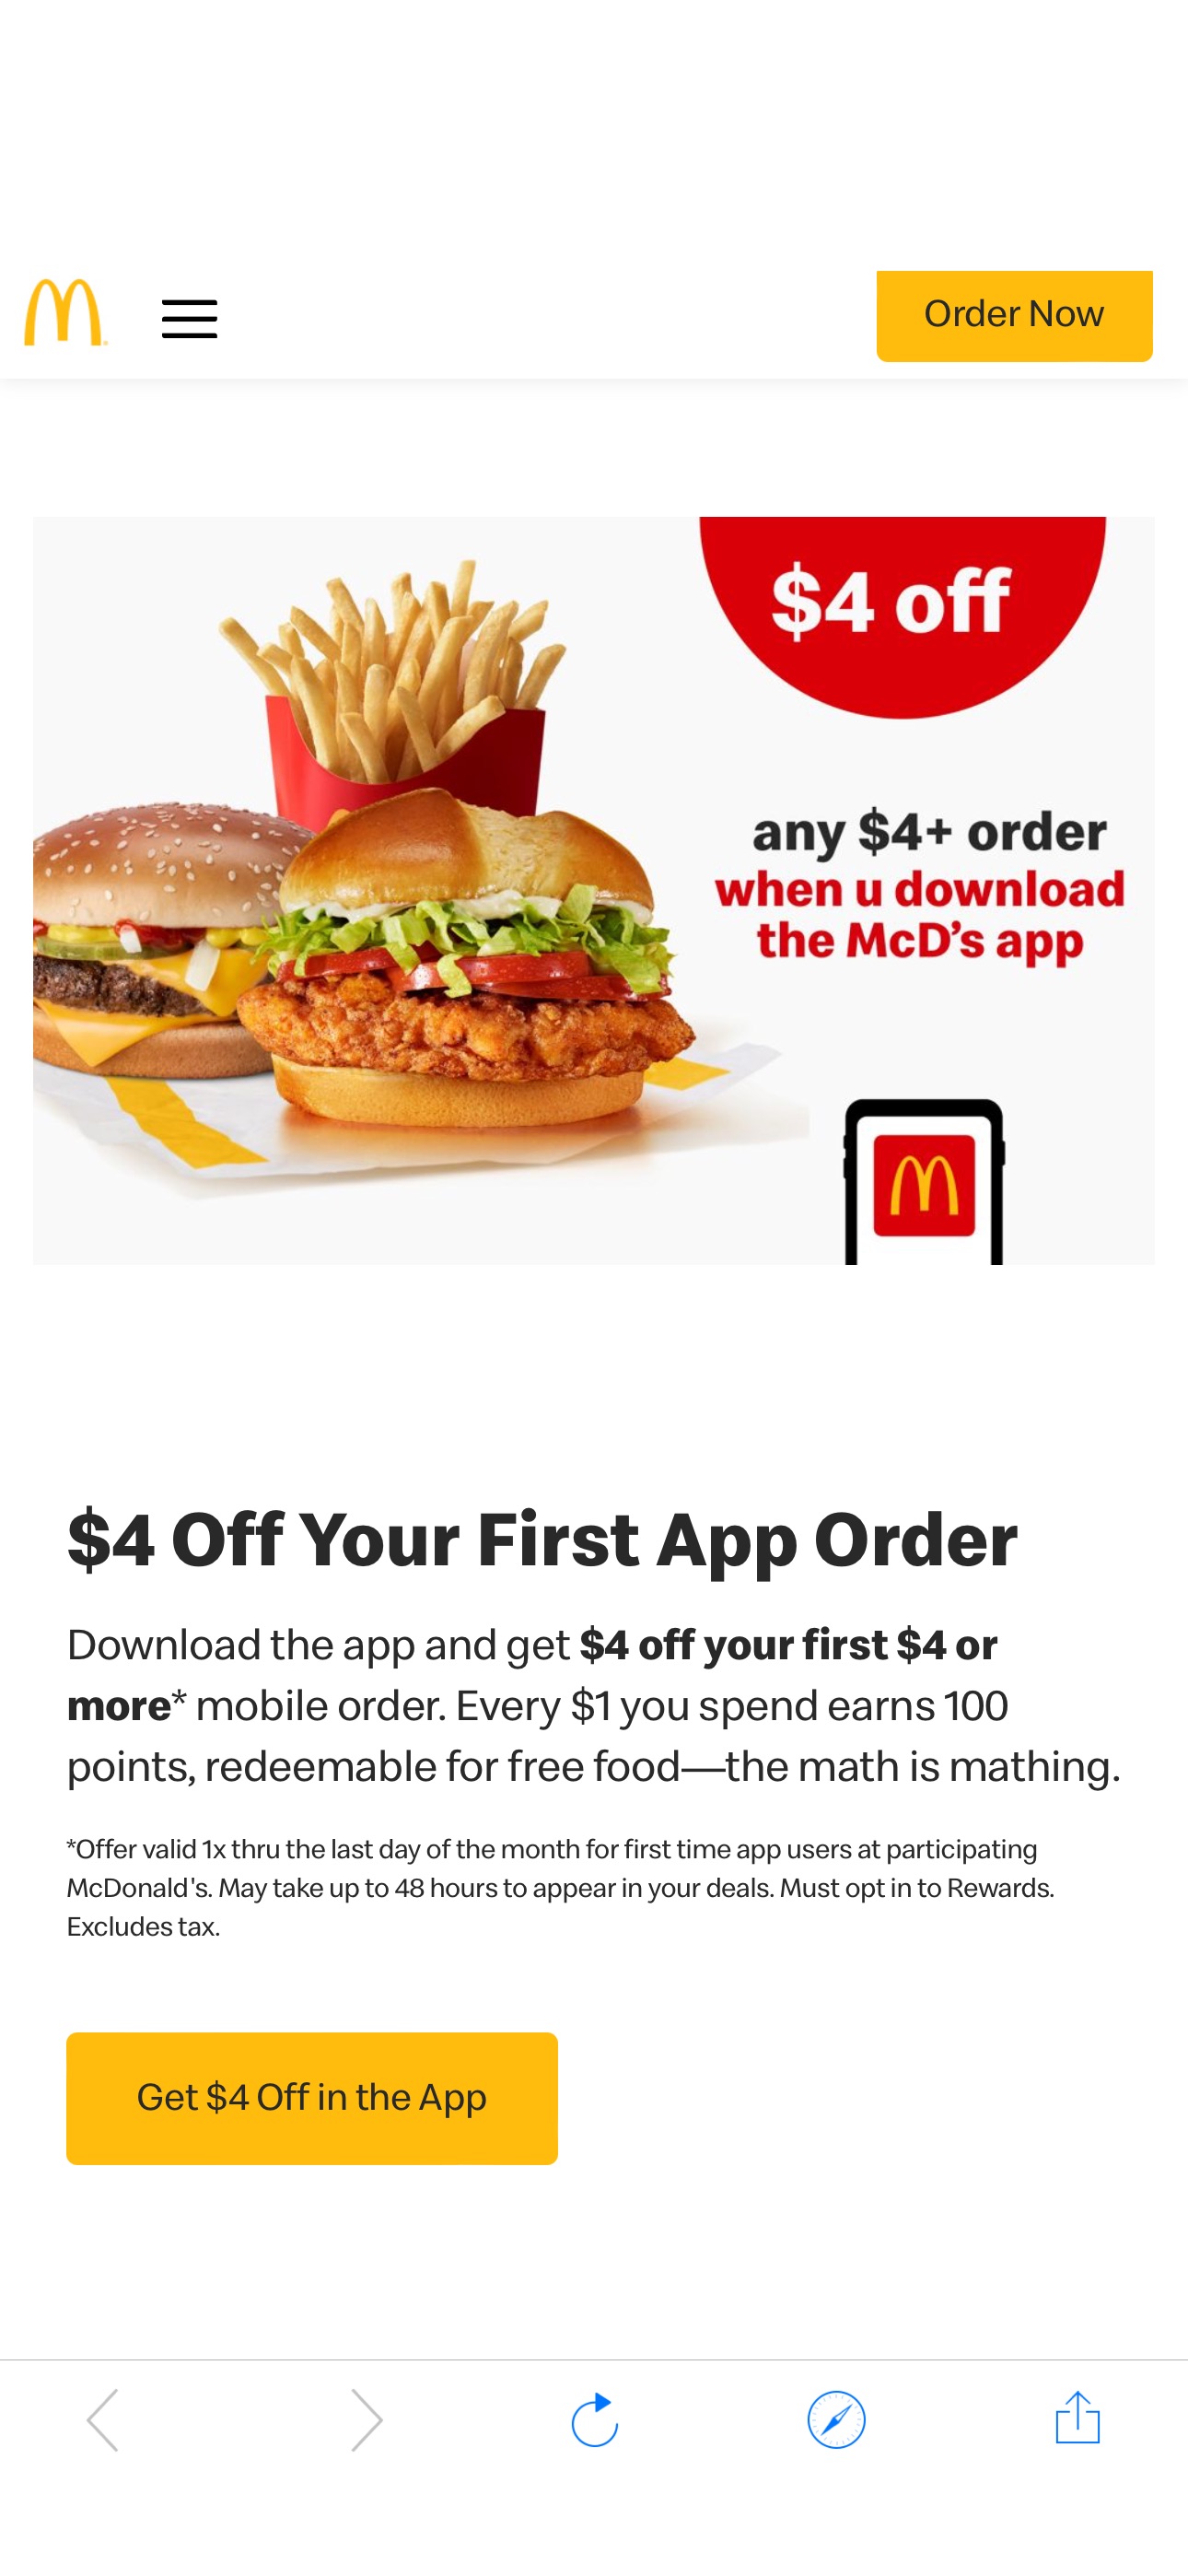 McDonald's: Burgers, Fries & More. Quality Ingredients省$4